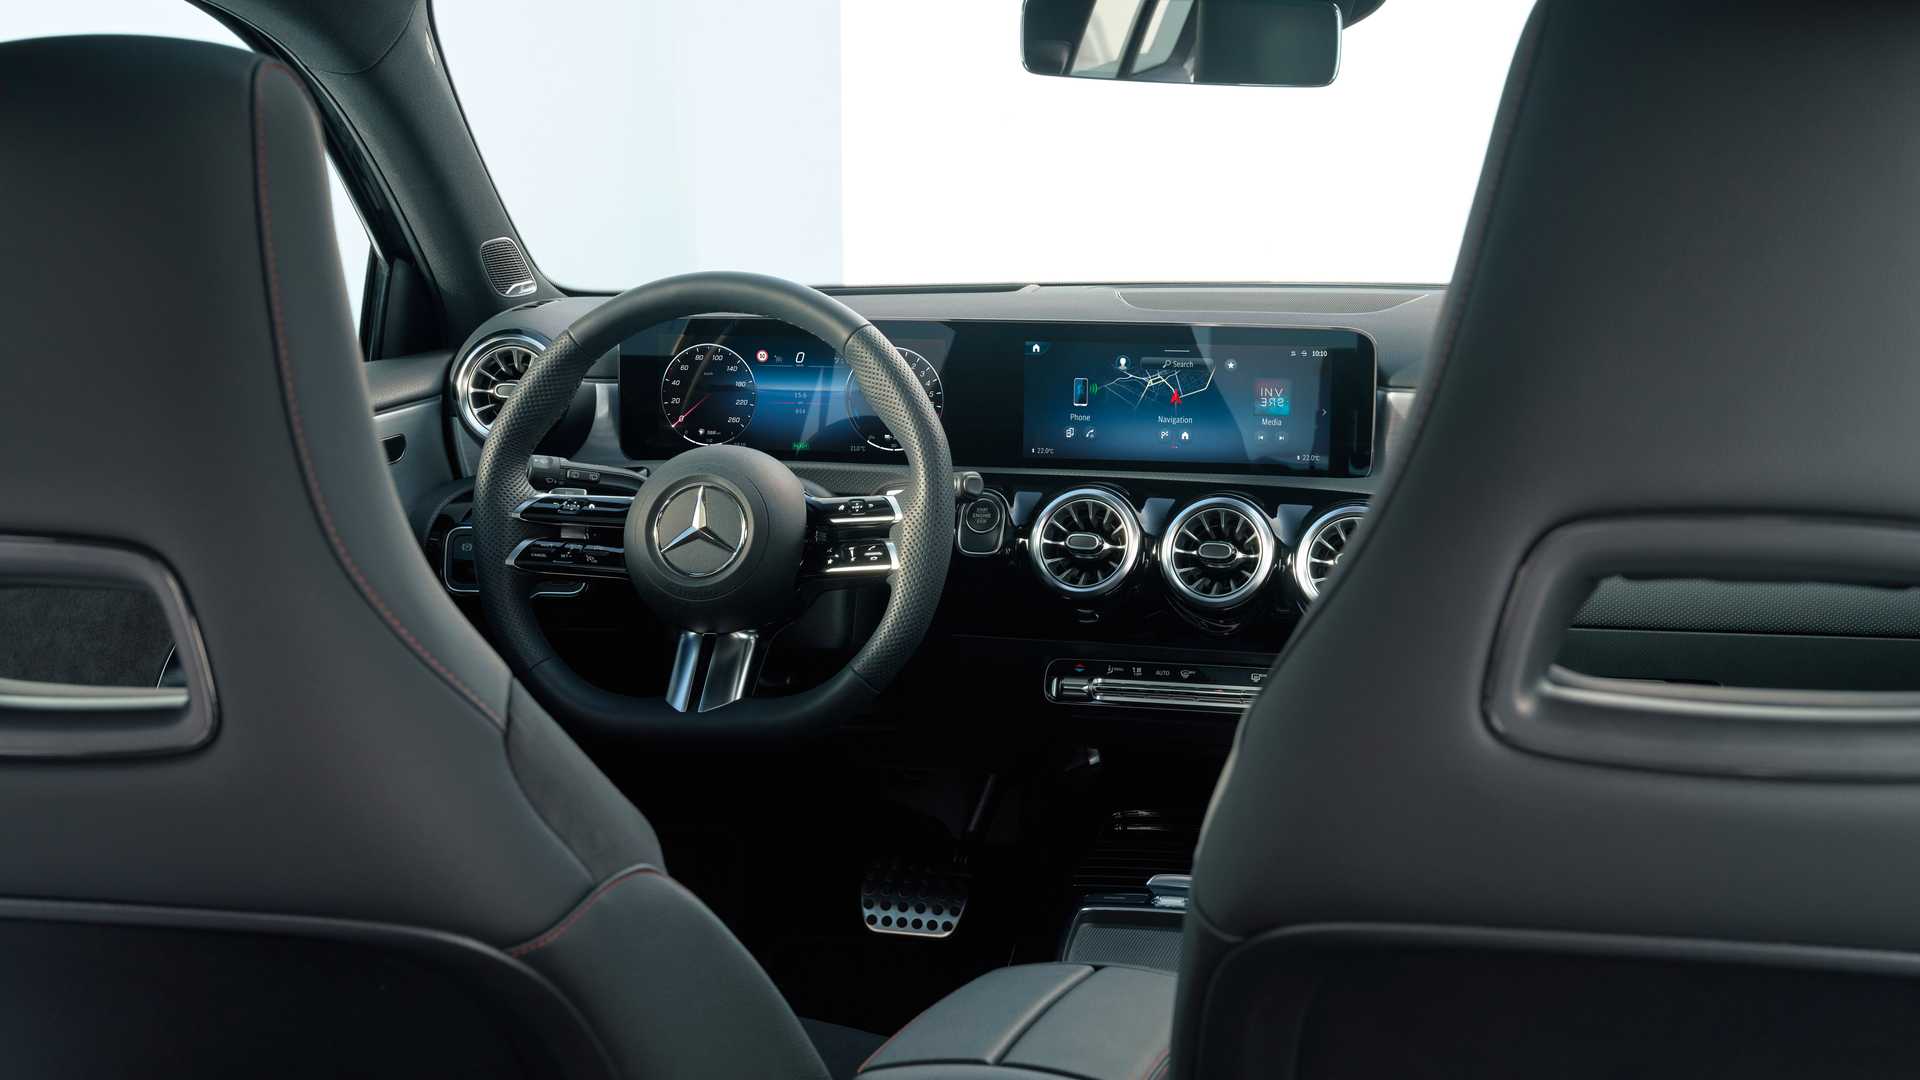 Makyajlı Mercedes-Benz A Serisi iç kabin